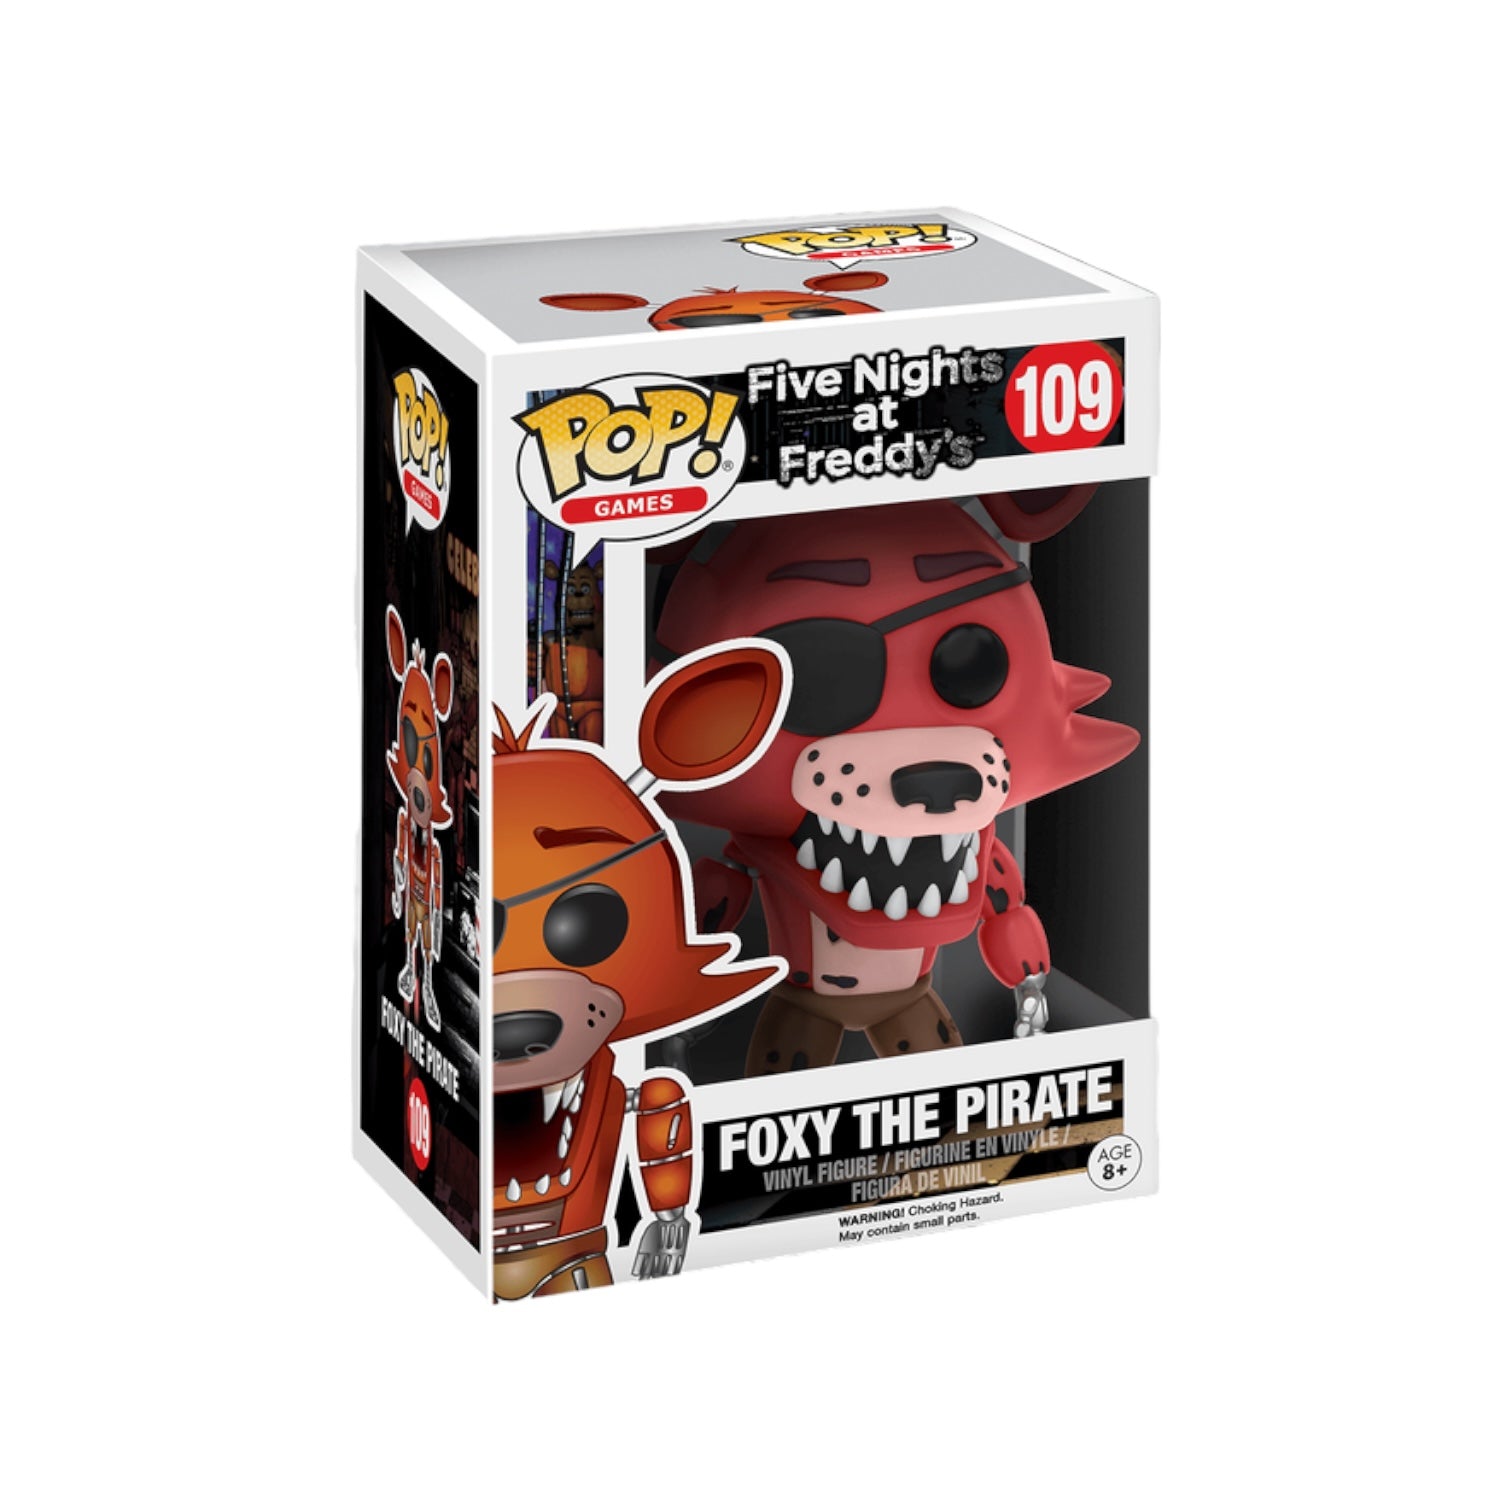 Foxy the Pirate #109 Funko Pop - Five Nights at Freddy's